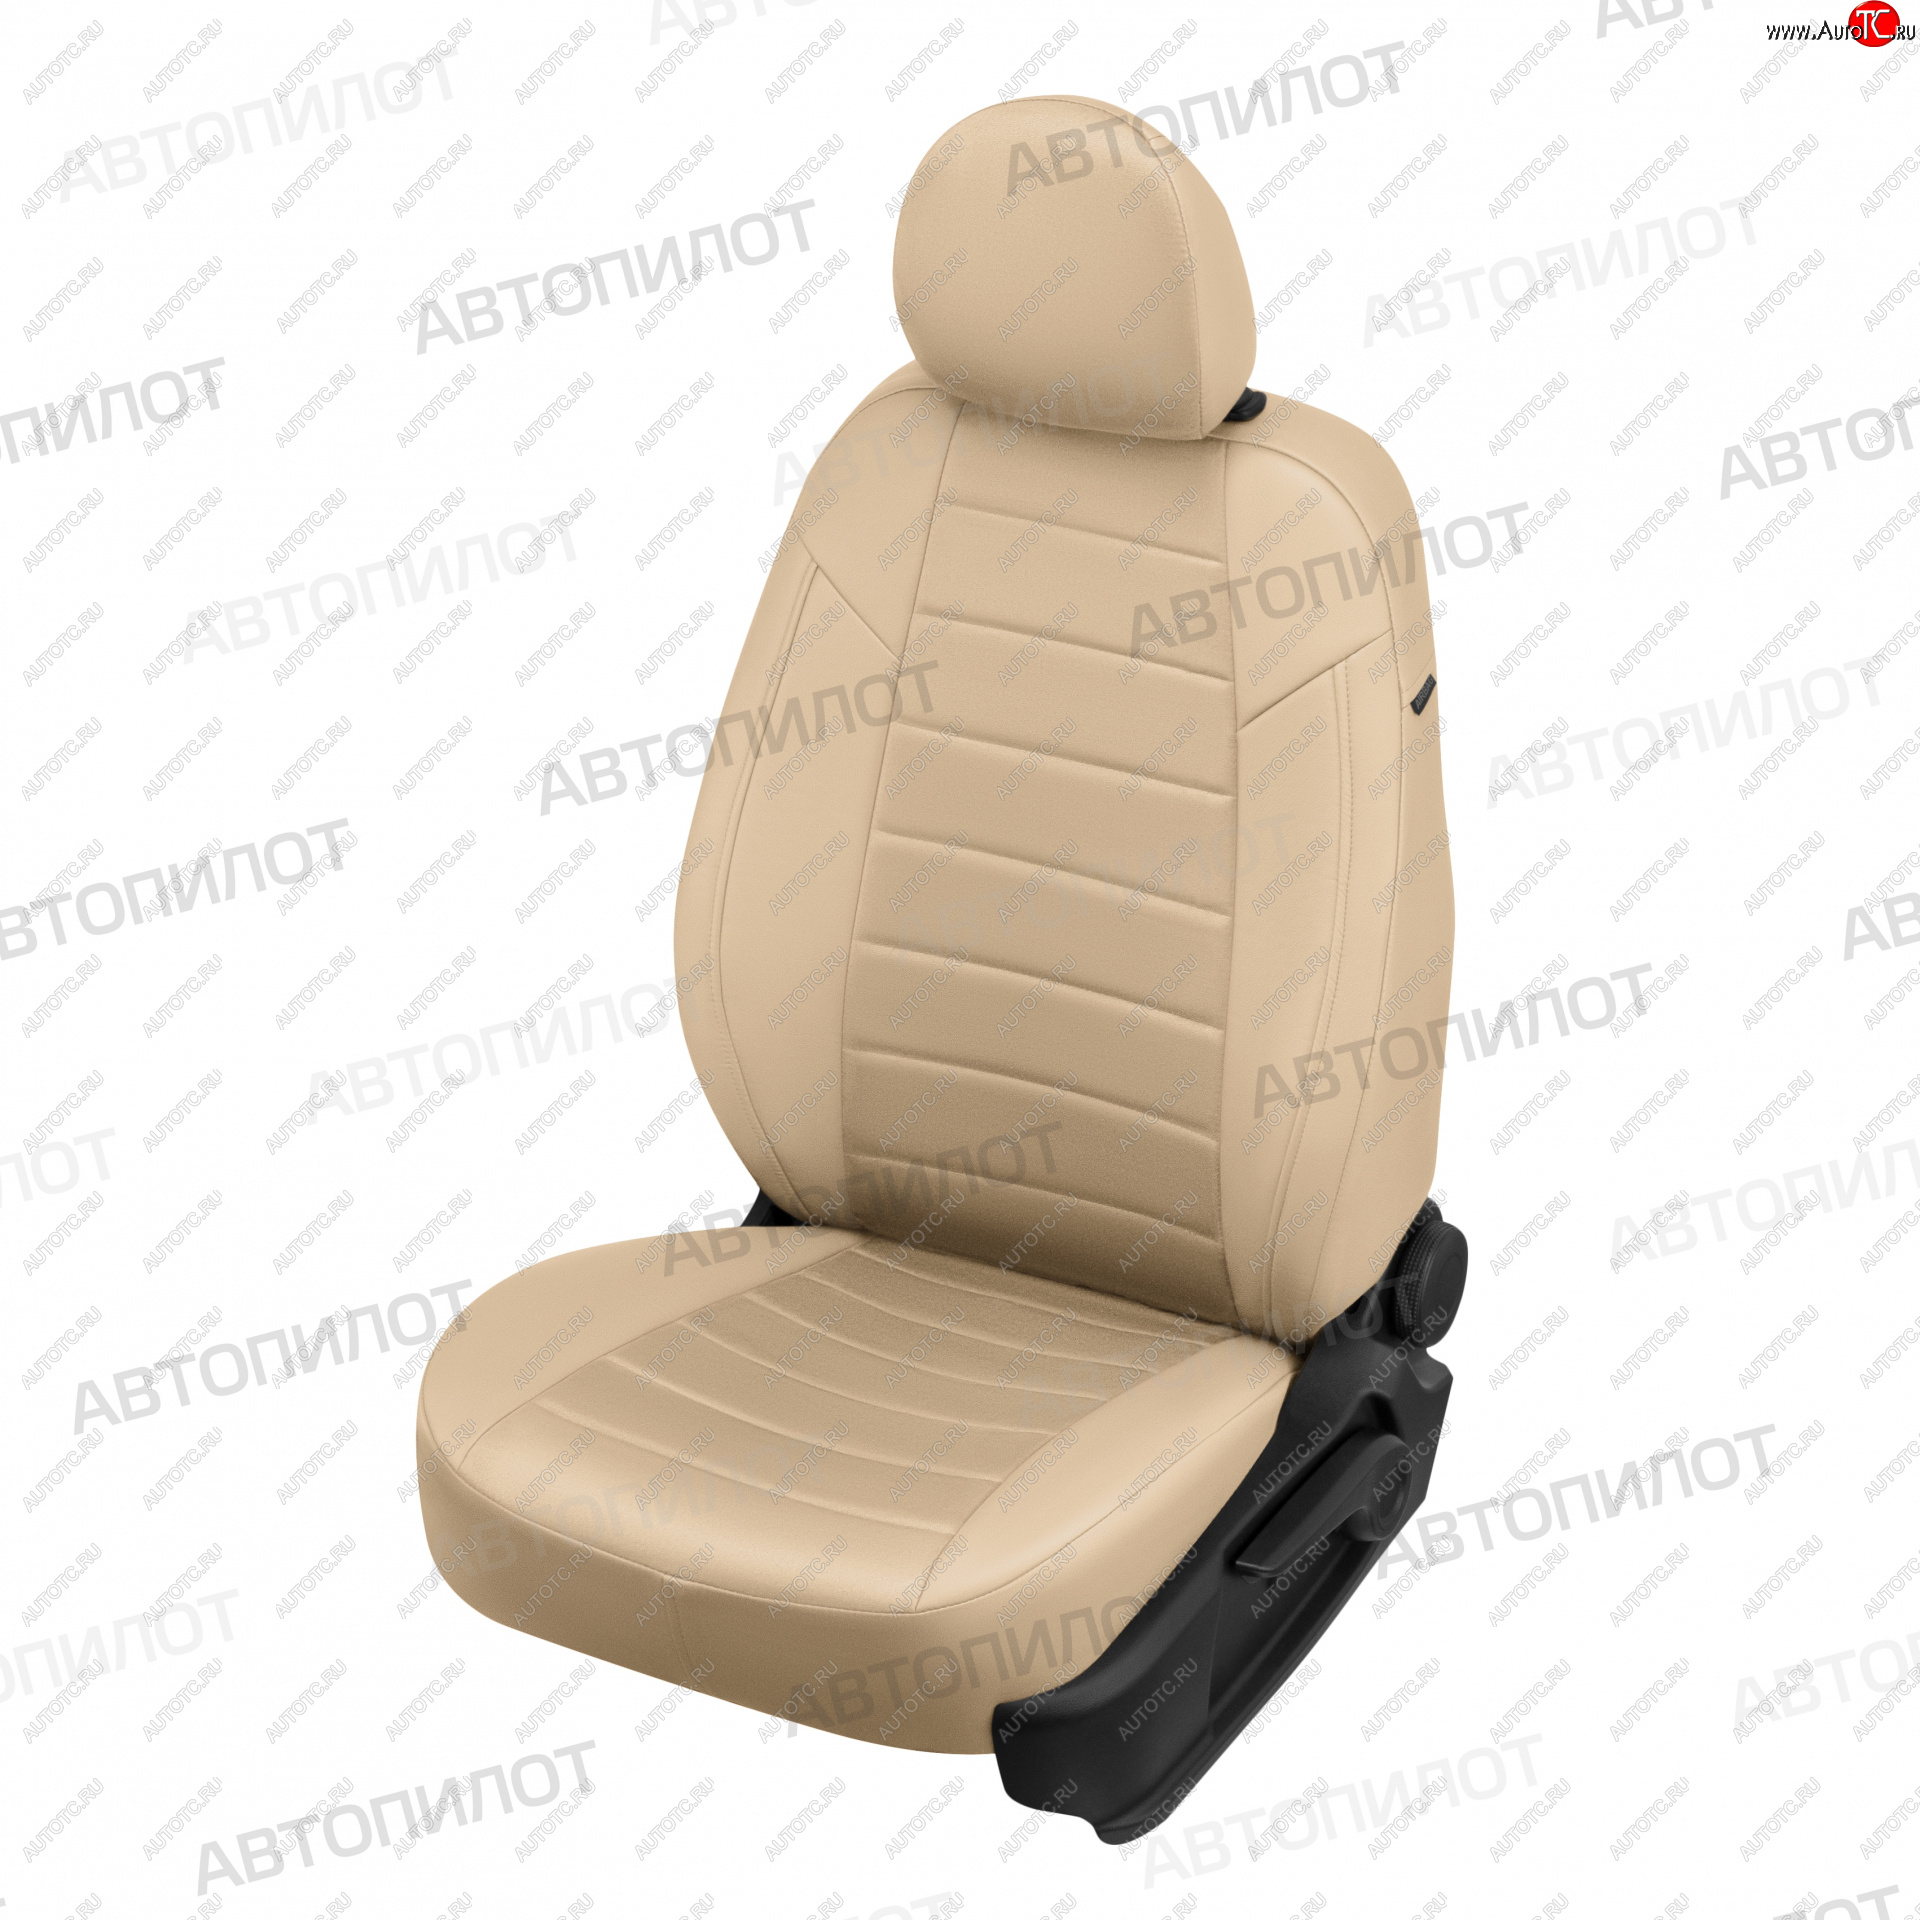 13 849 р. Чехлы сидений (экокожа/алькантара) Автопилот Hyundai Sonata NF дорестайлинг (2004-2008) (бежевый)